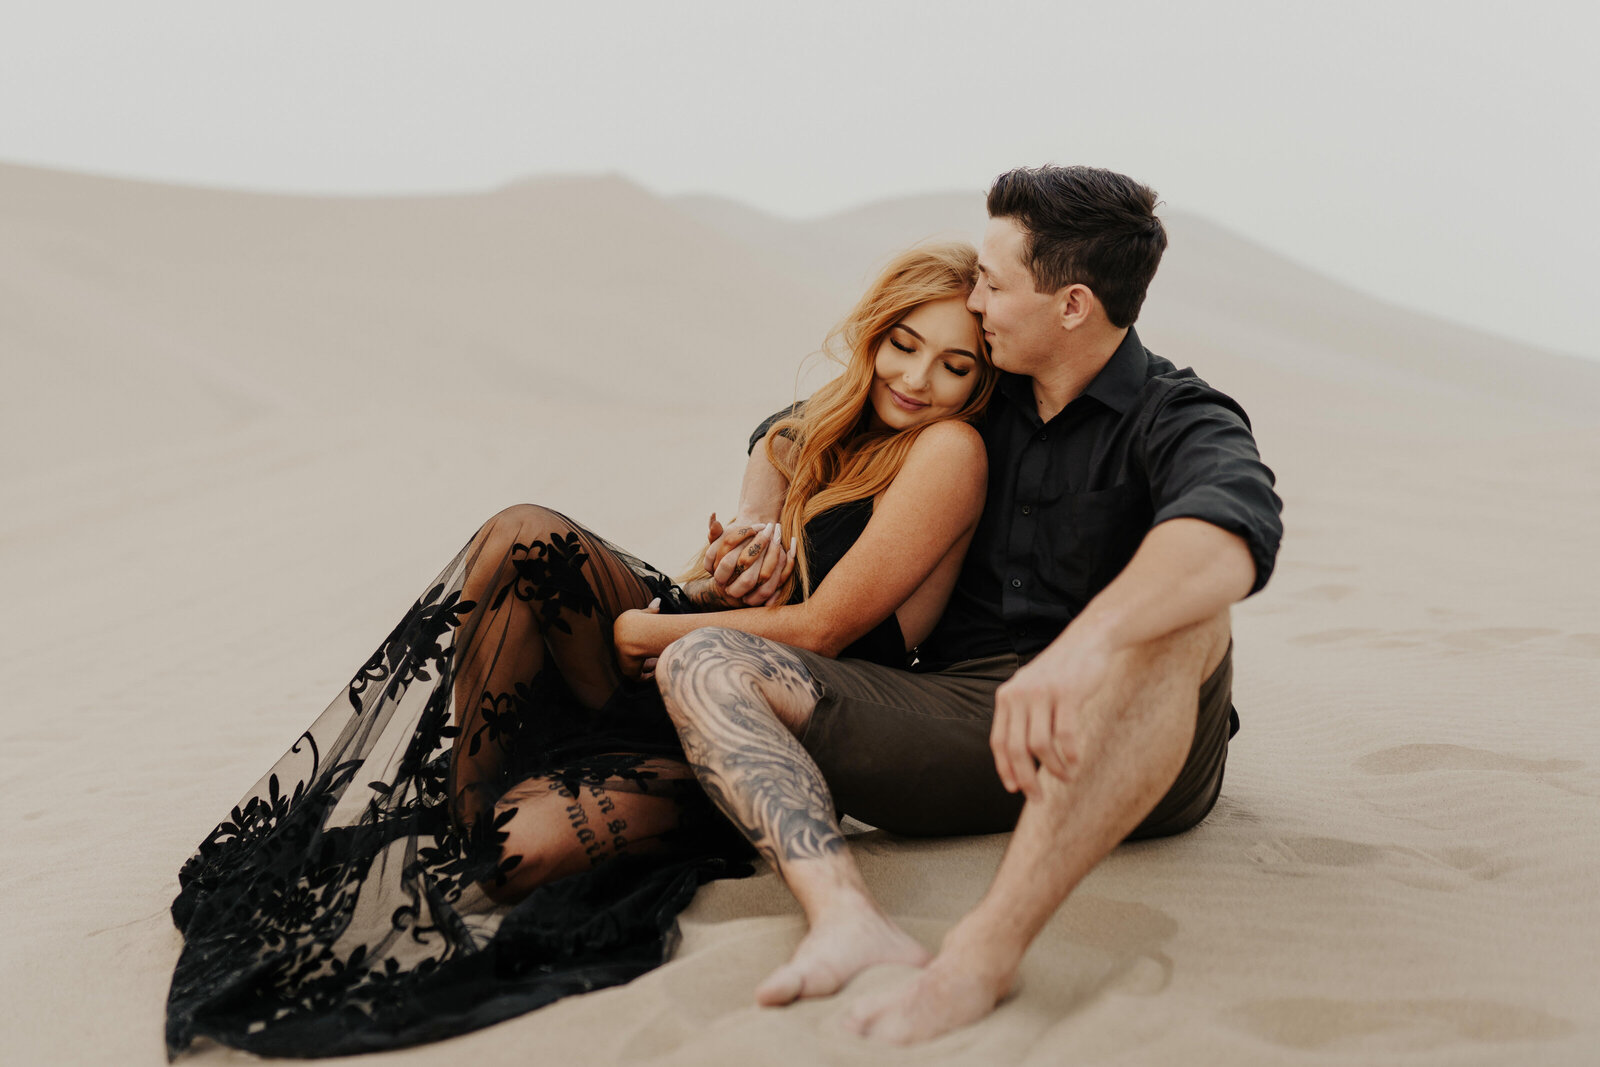 Sand Dunes Couples Photos - Raquel King Photography61